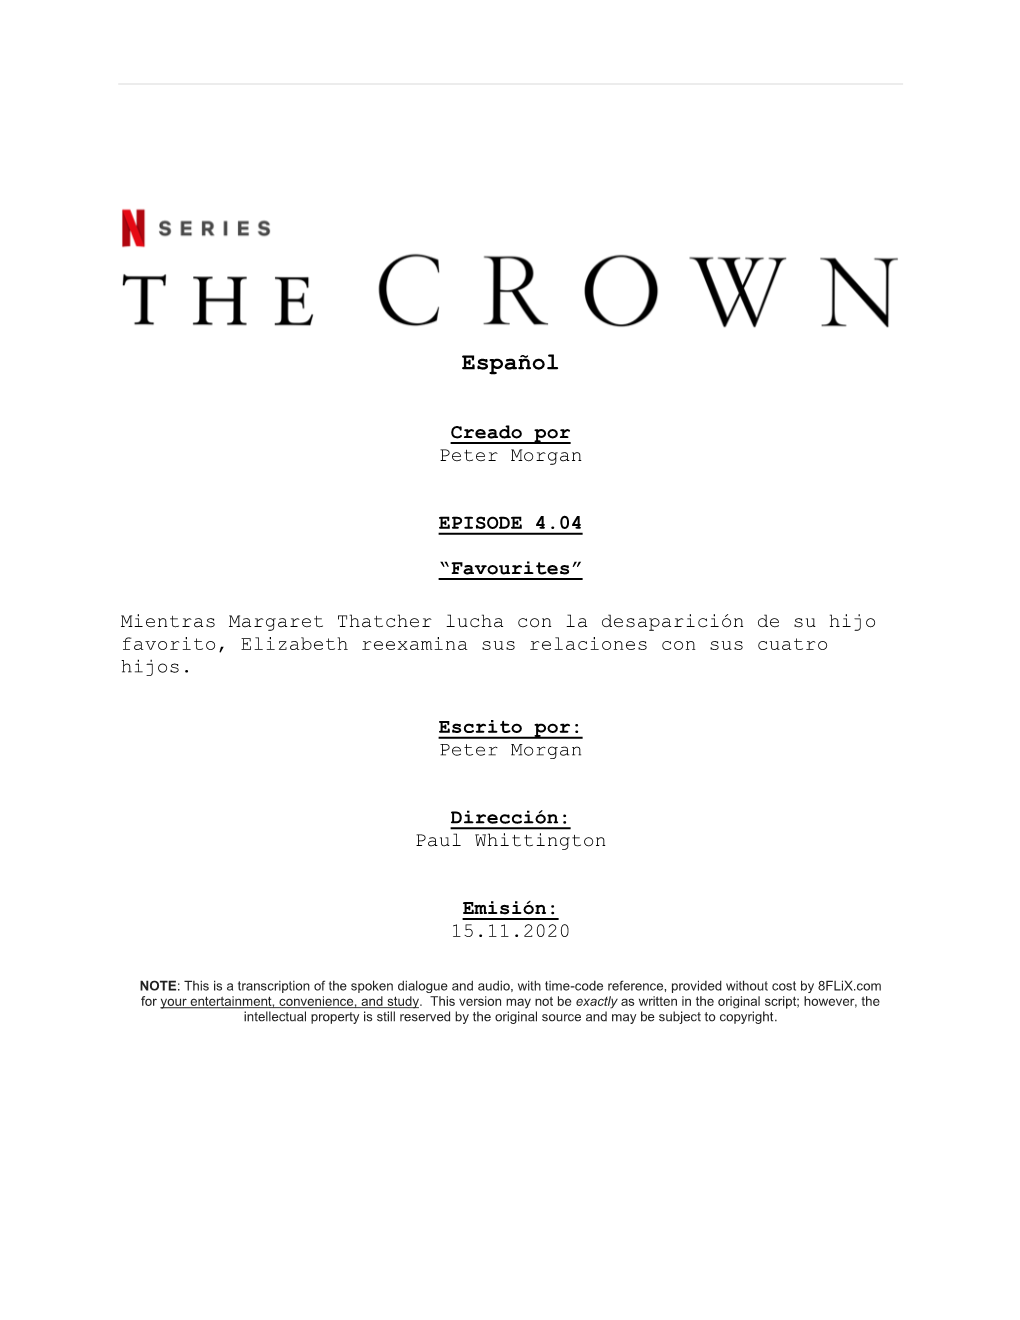 The Crown | Spanish Dialogue Transcript | S4:E4